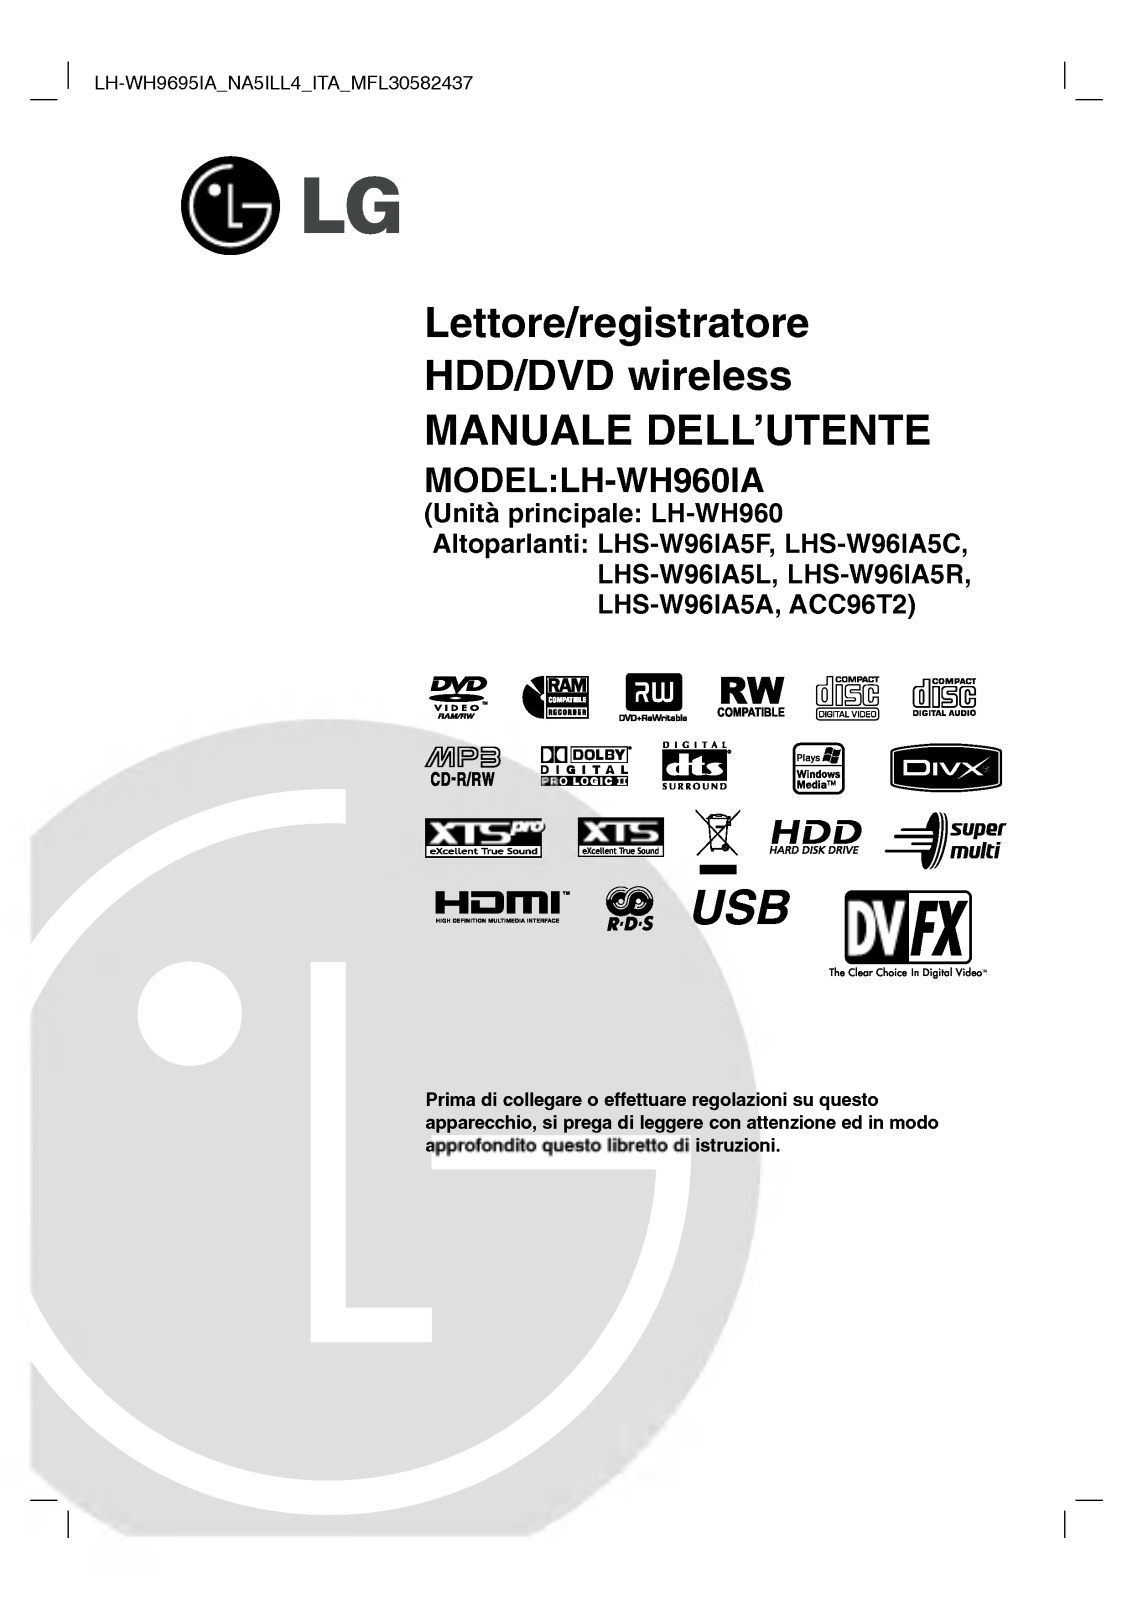 LG LH-WH9695IA User Manual